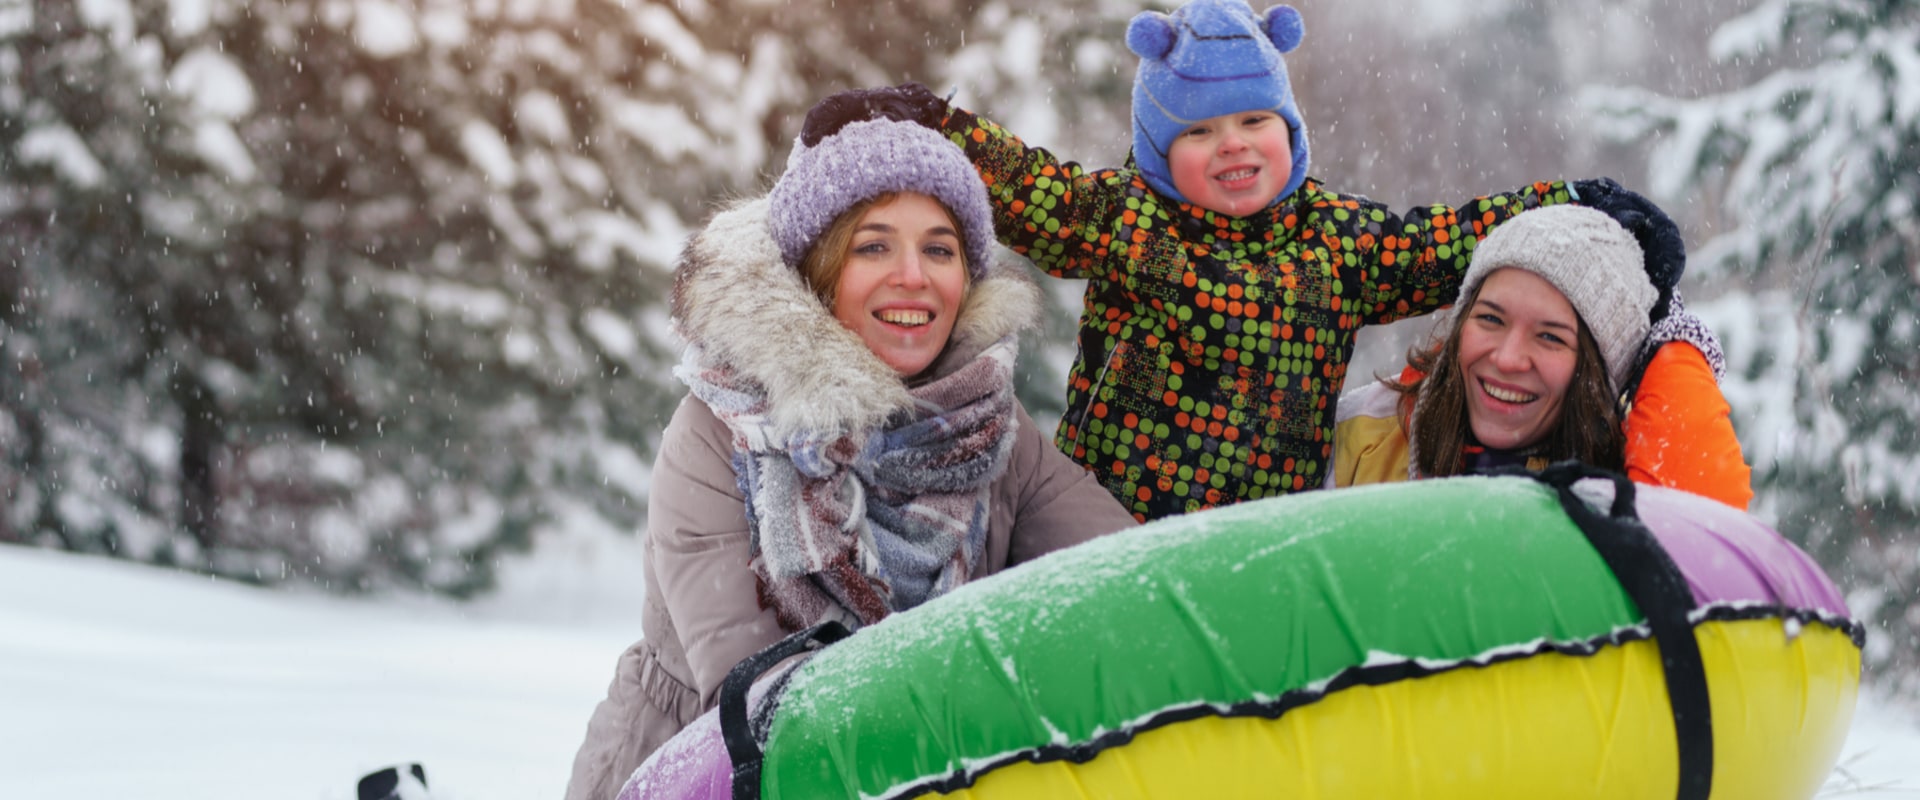 Exploring the Great Outdoors: Popular Winter-Based Outdoor Recreational Activities